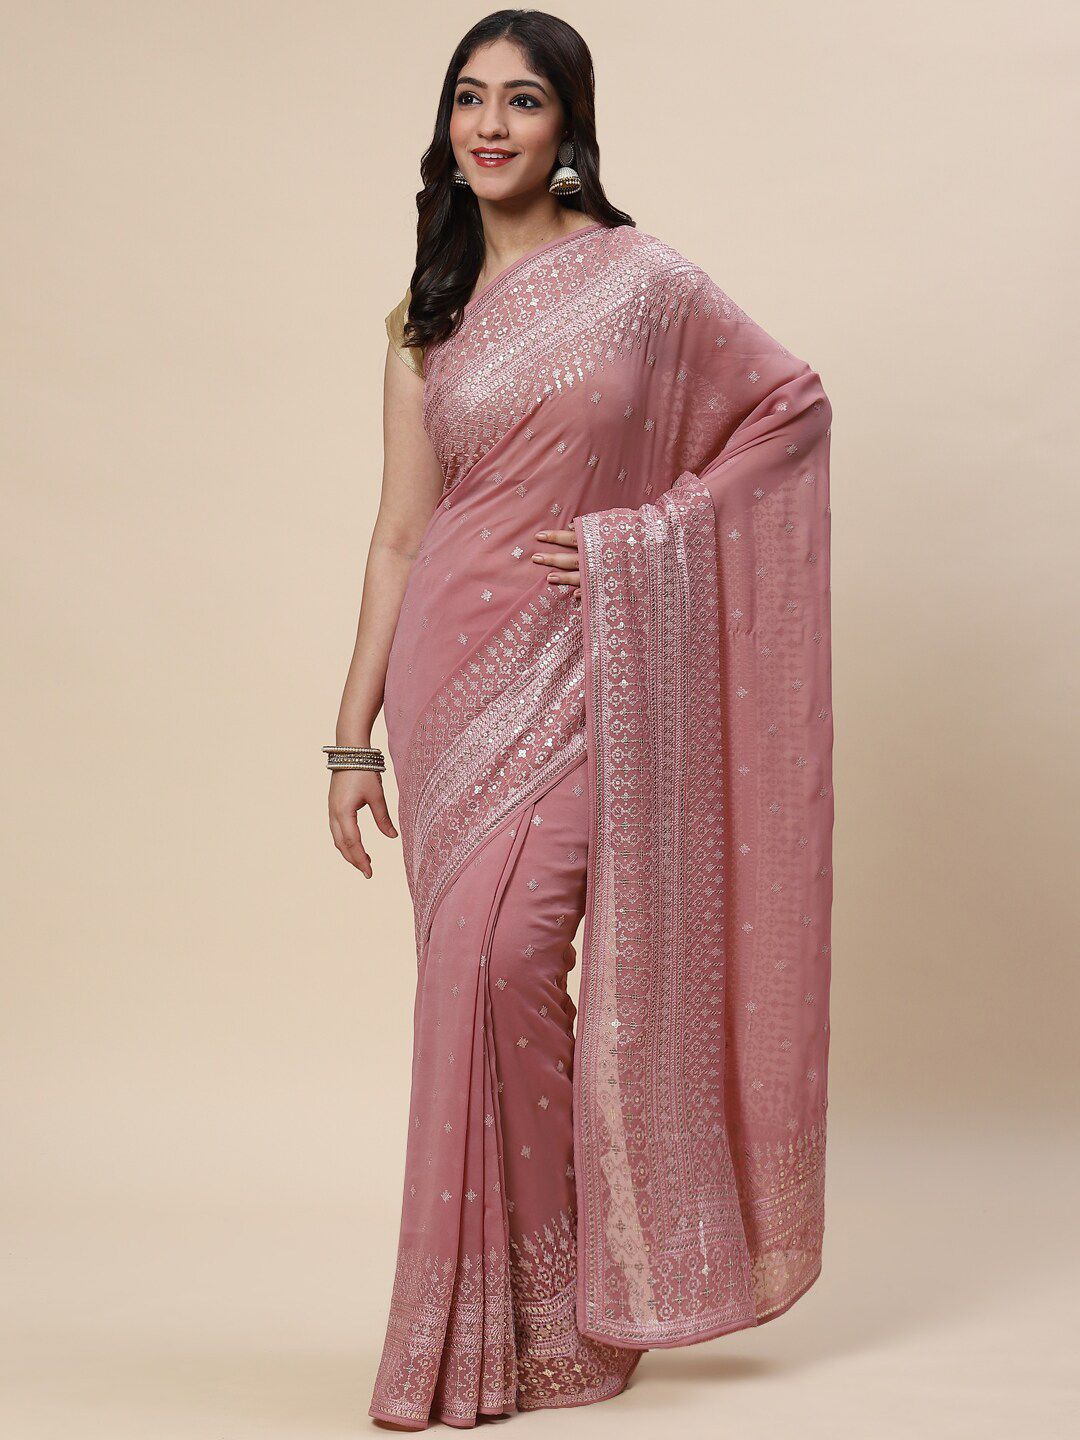 Meena Bazaar Pink & Silver-Toned Embellished Sequinned Saree Price in India